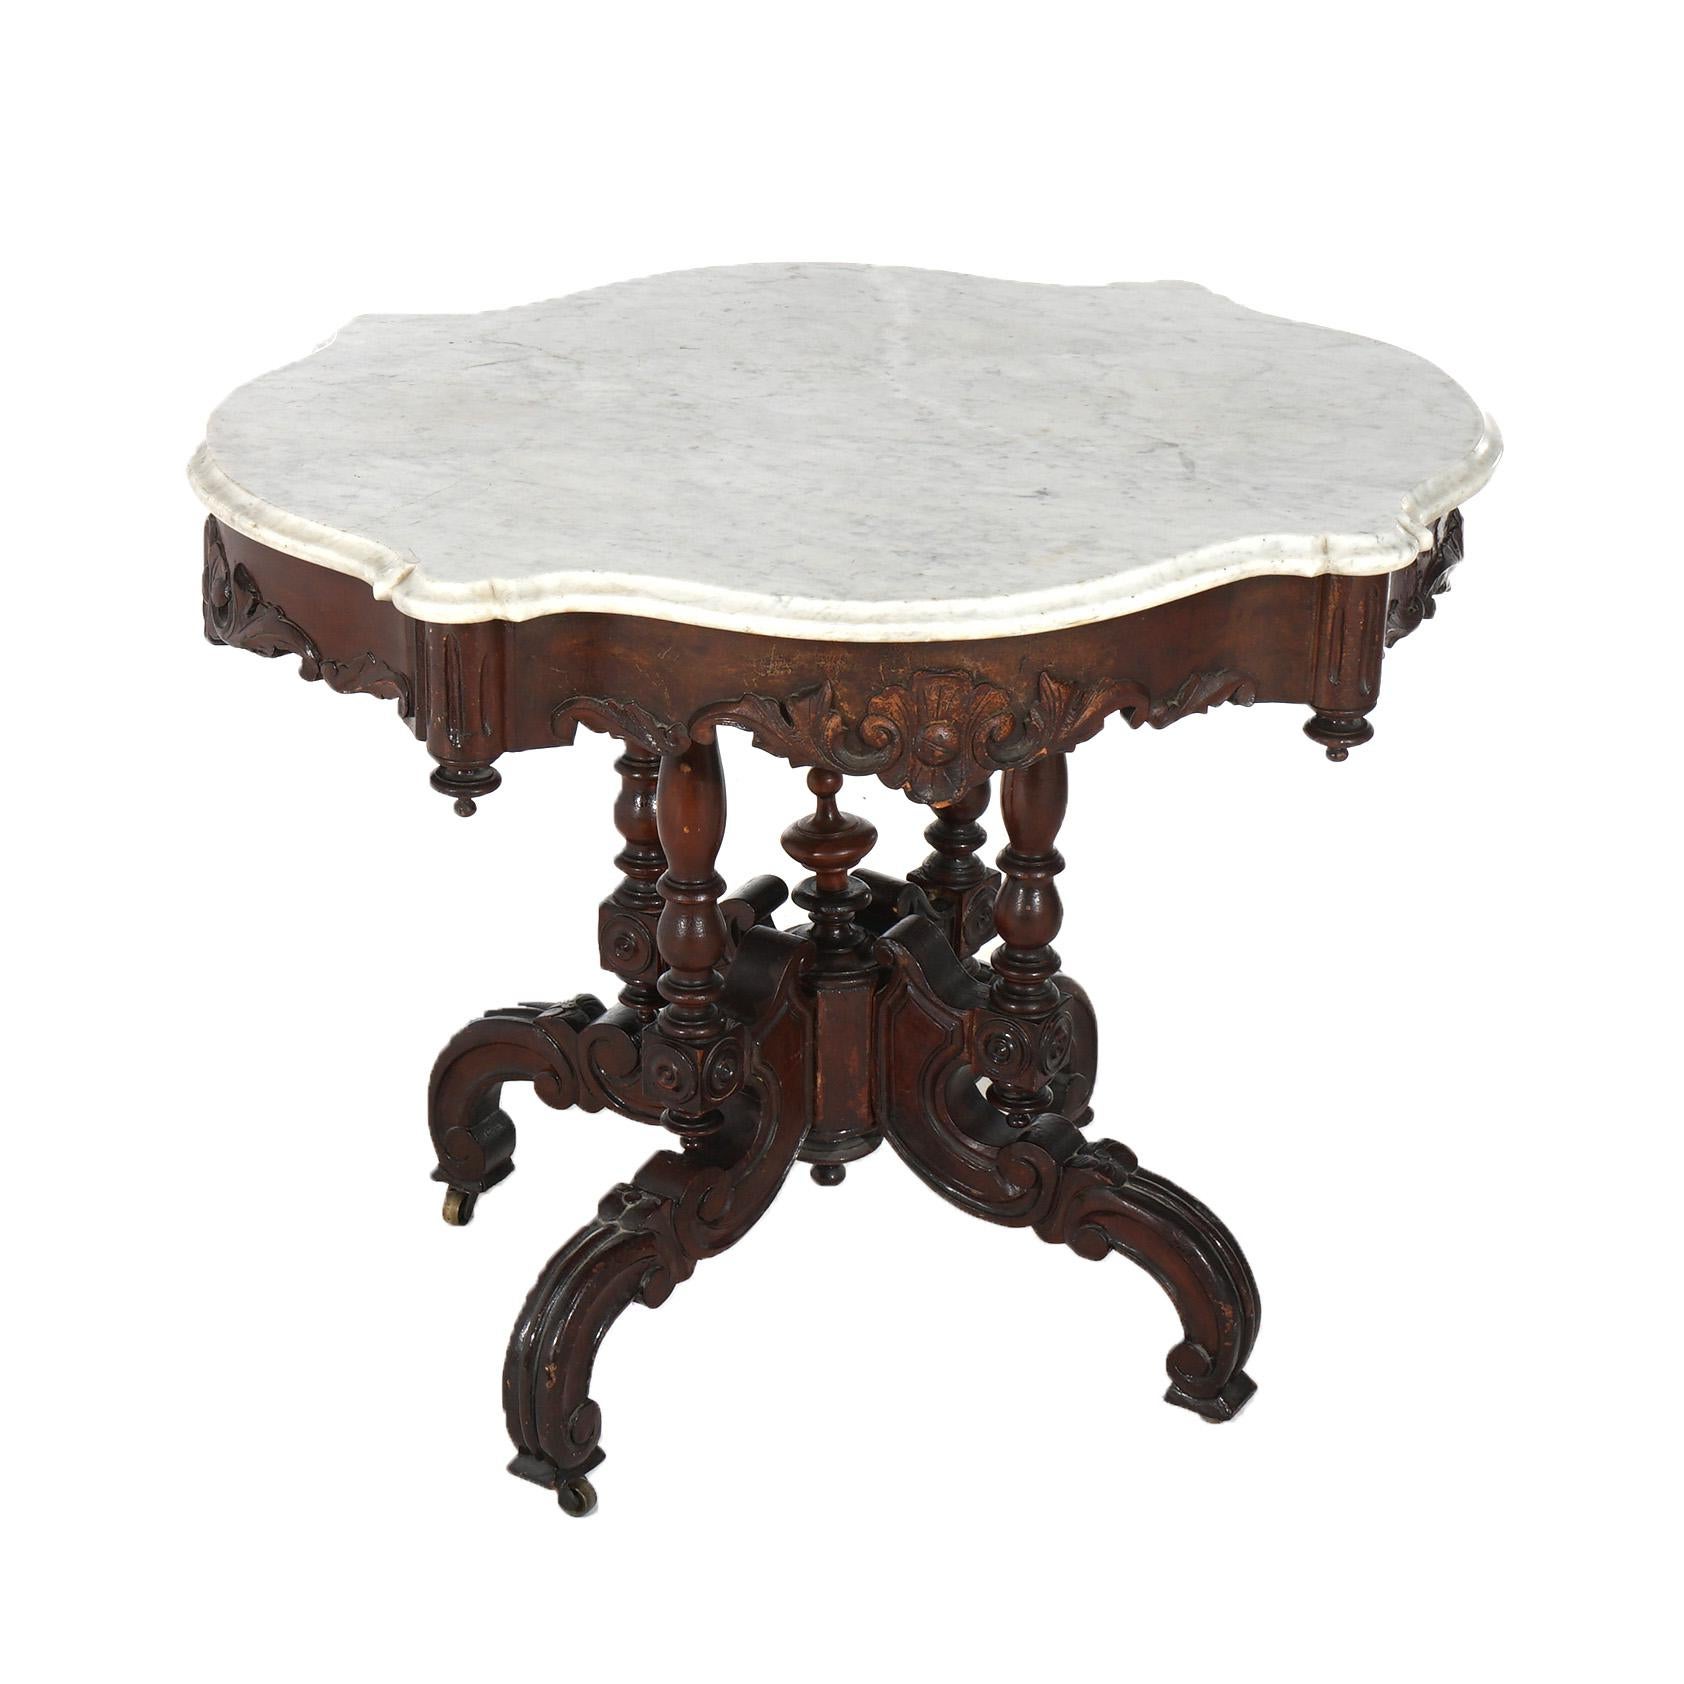 Antique Renaissance Revival Carved Walnut & Marble Turtle Top Table C1890 For Sale 7